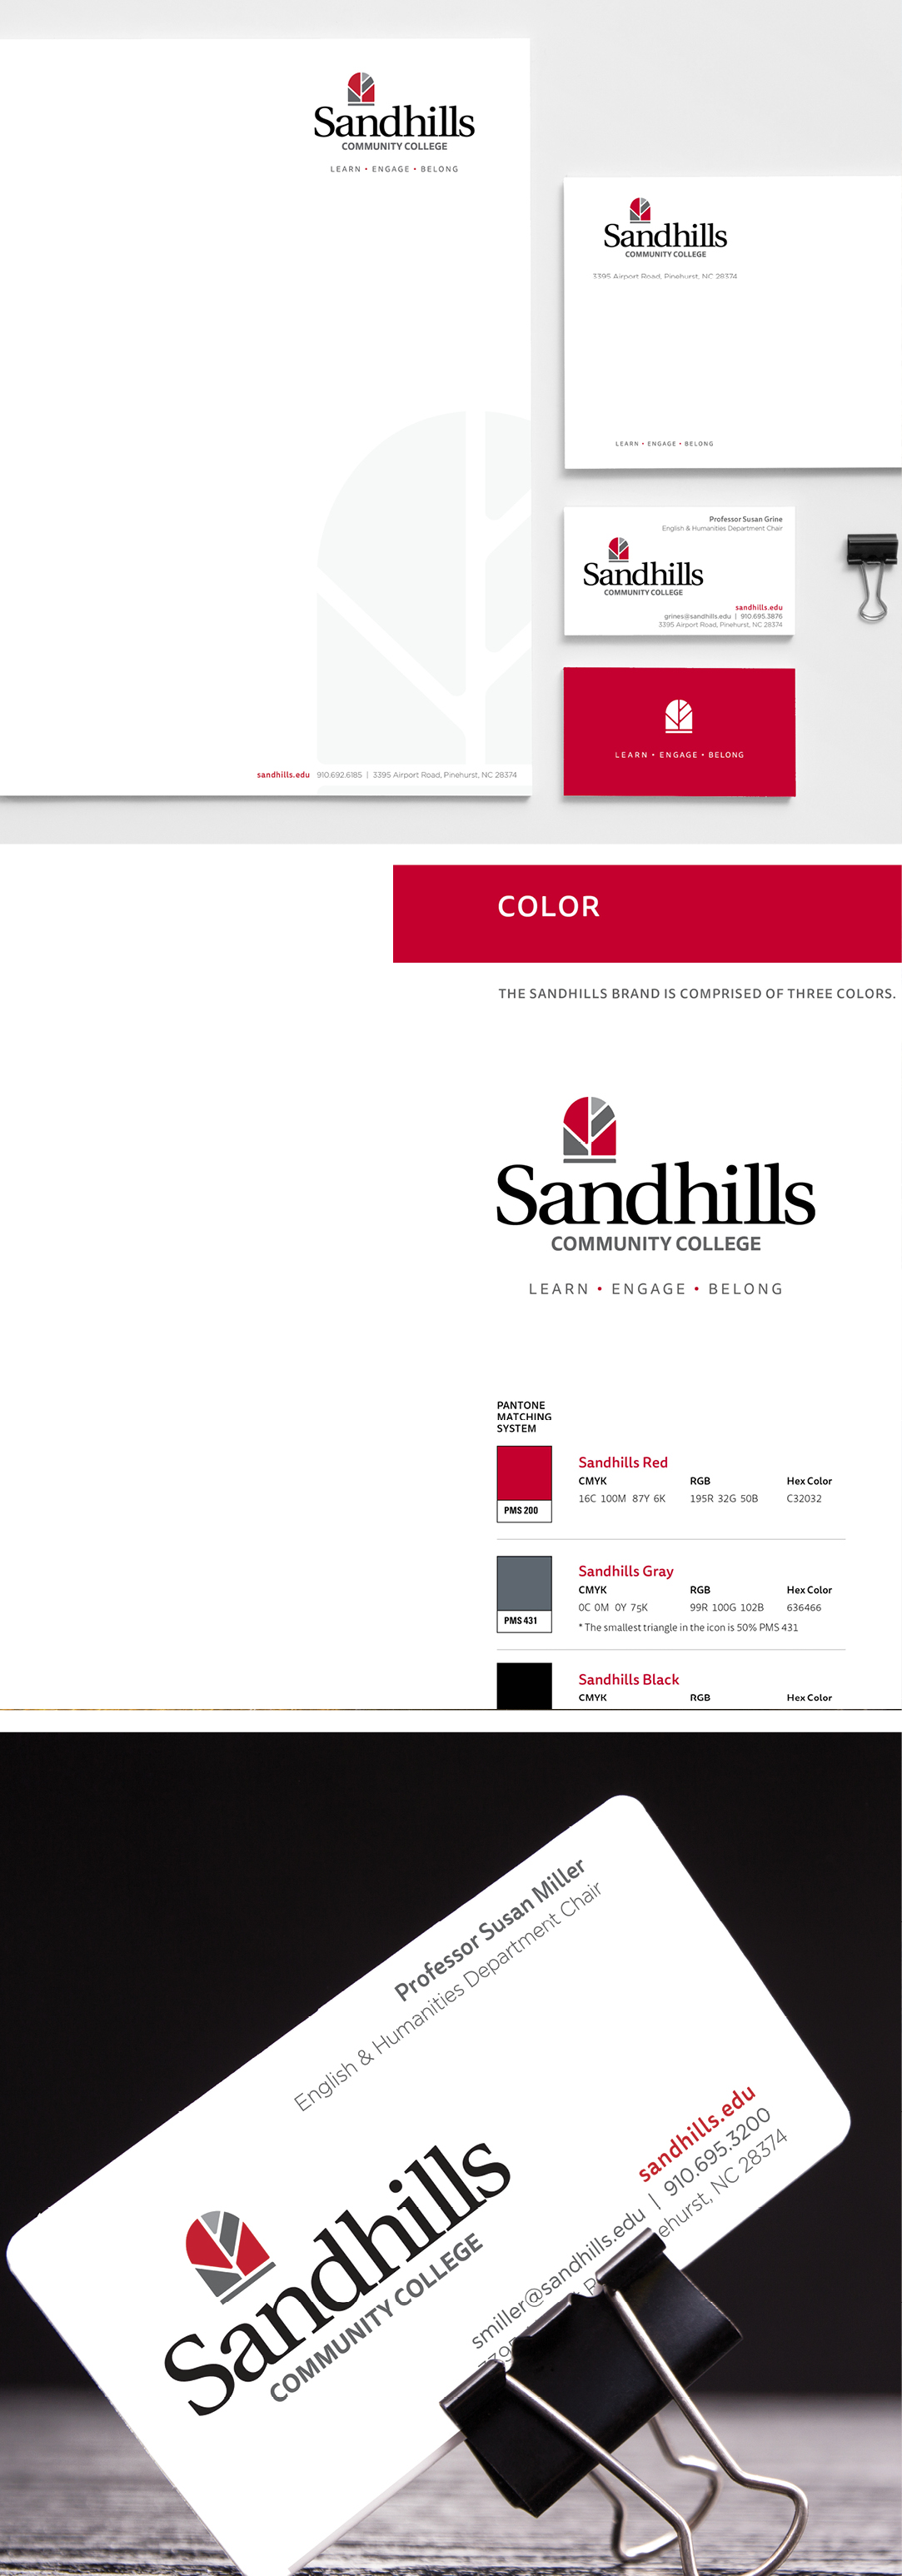 Sandhills Community College Brand Manual